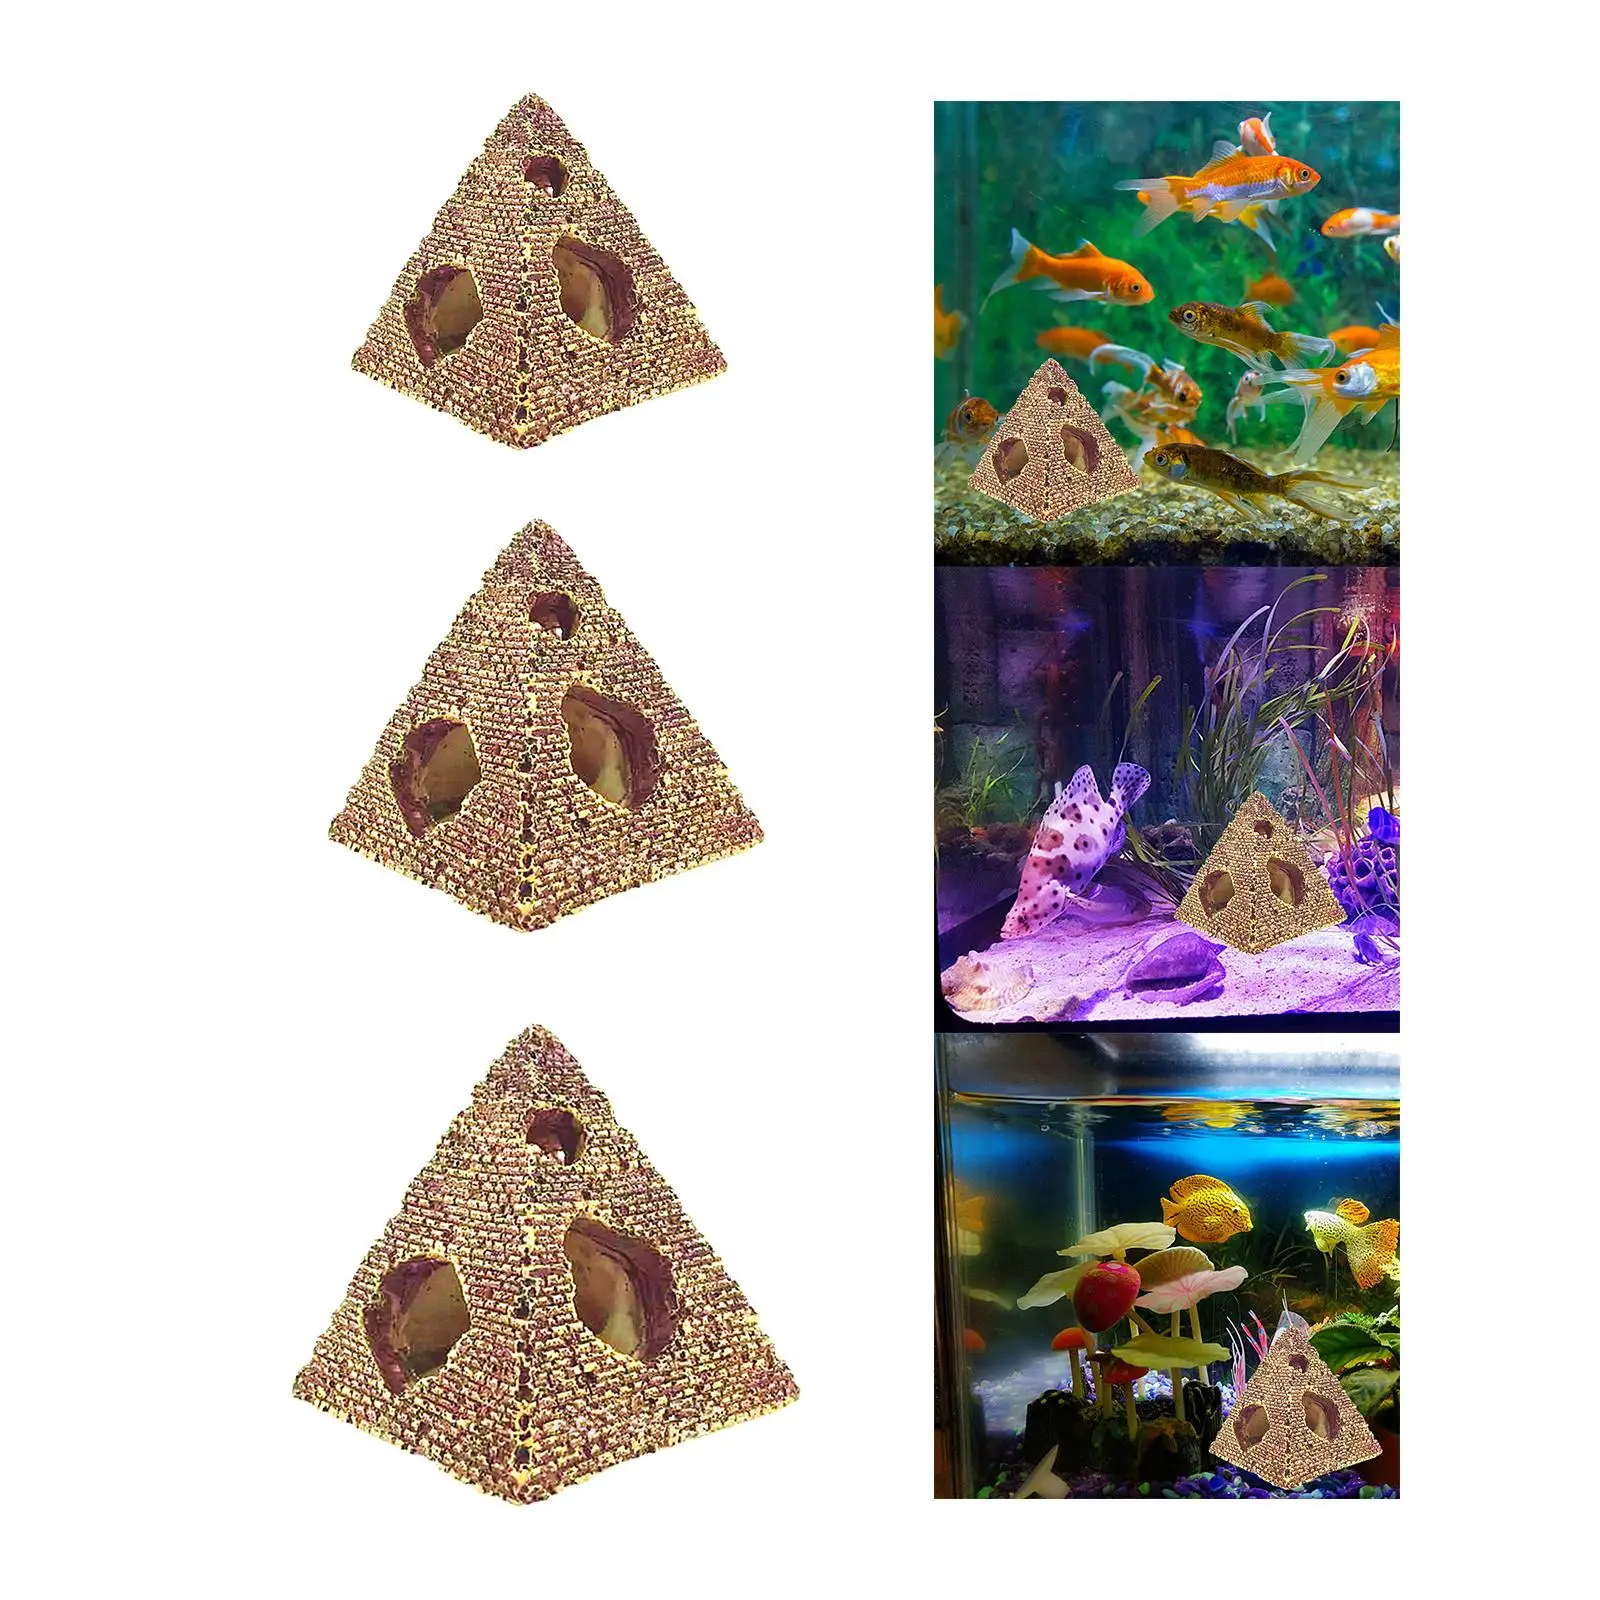 Vivid Aquarium Pyramids Decorations Hideout House Egyptian Pyramid Statue Fish Tank Ornaments for Salt Water Fish Breeding Pot